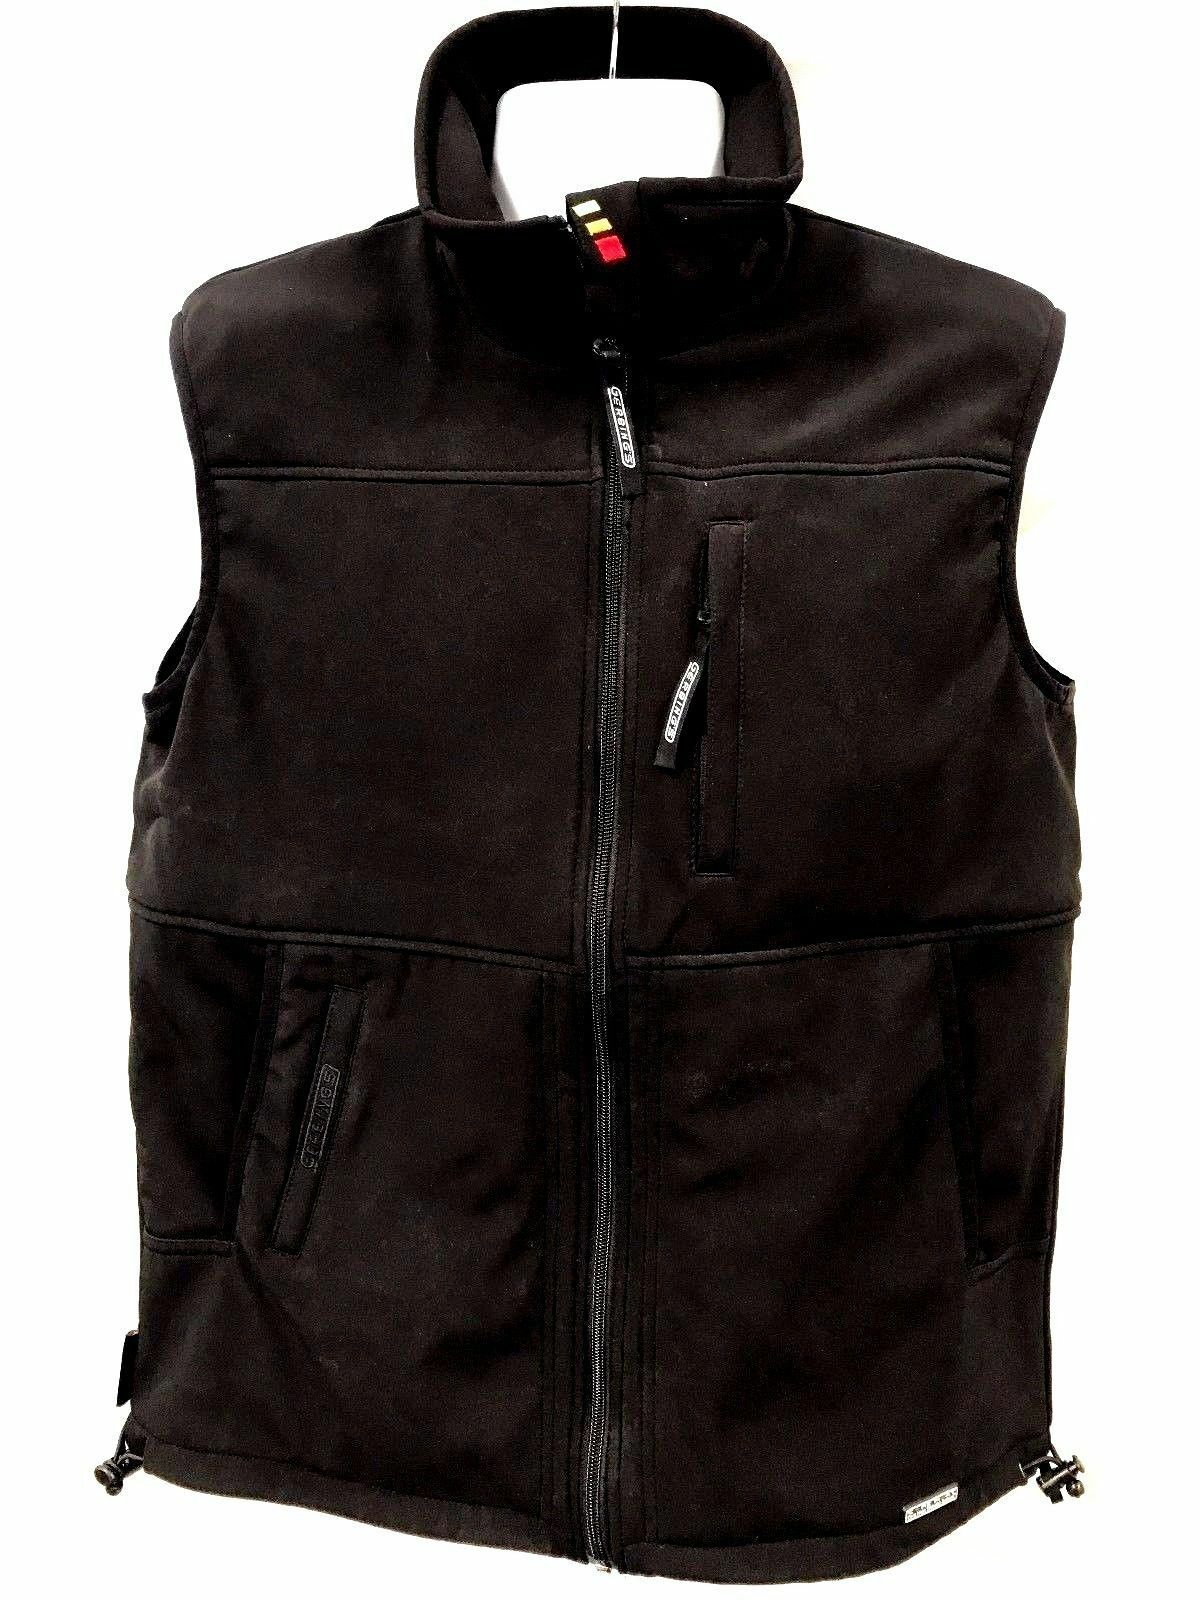 Gerbing Core Heat Men's Soft Shell Vest Black 7v Battery Heated